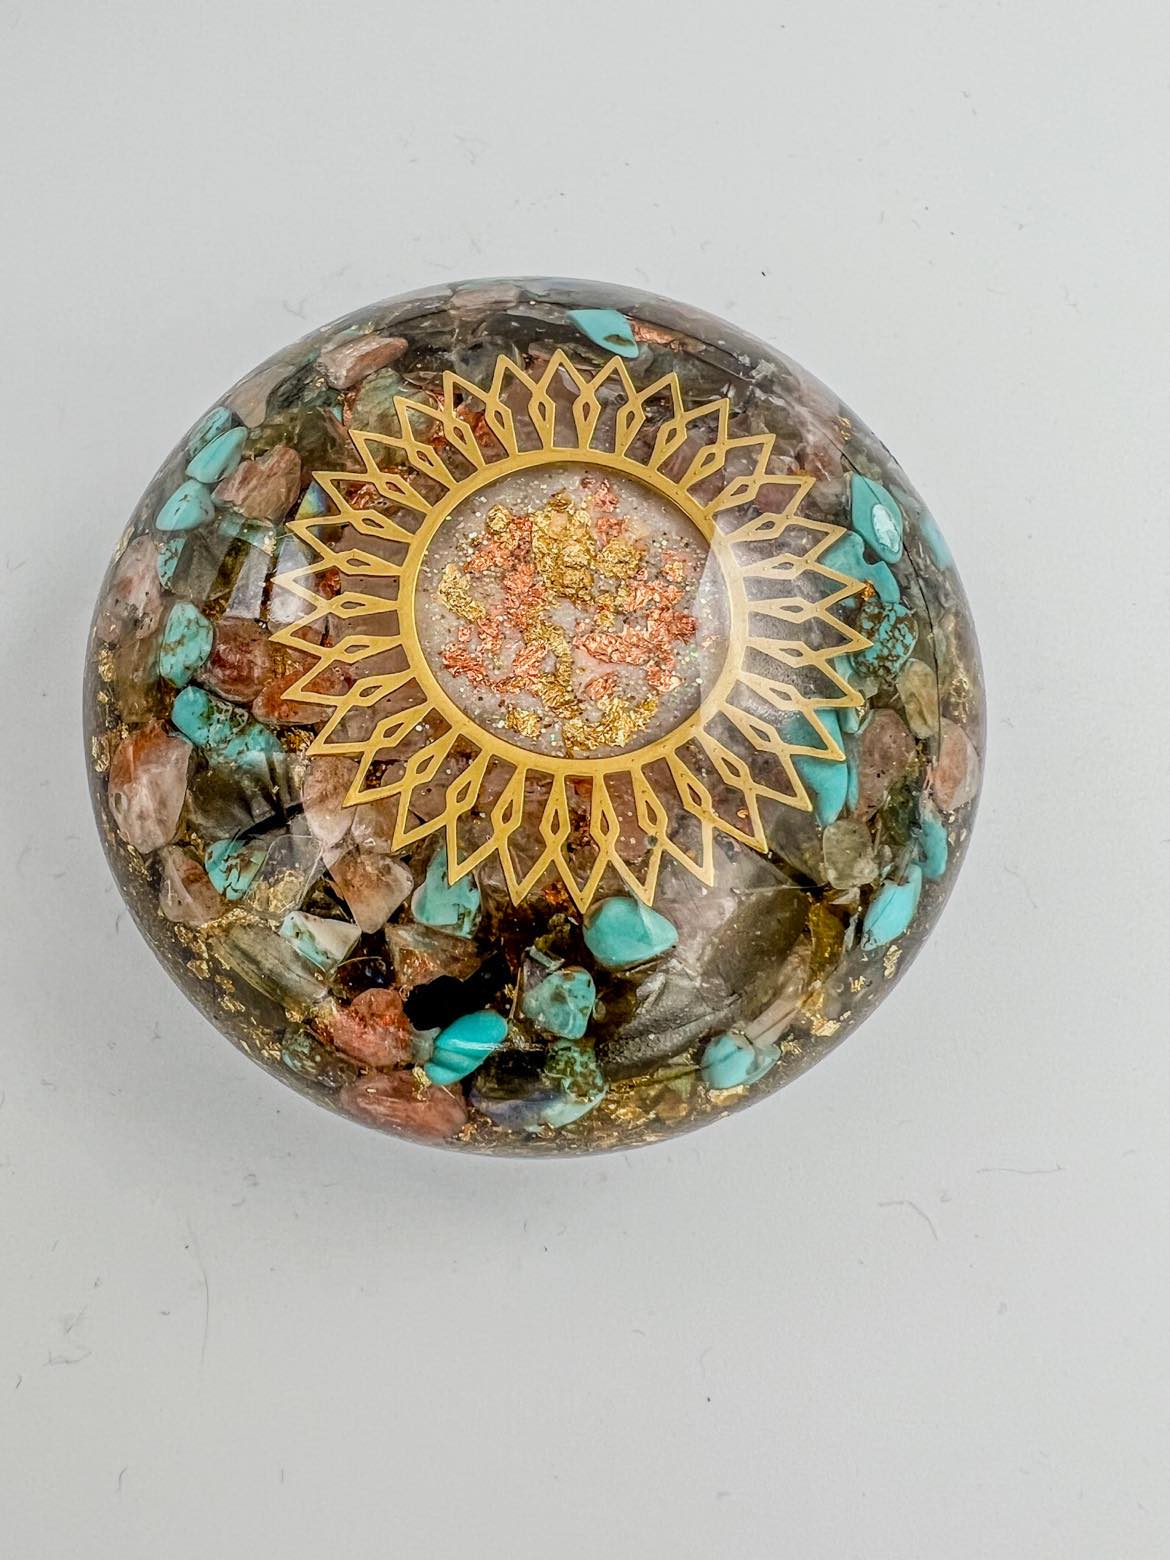 Orgonite pebble - Turquoise, Labradorite, Sun Stone. 